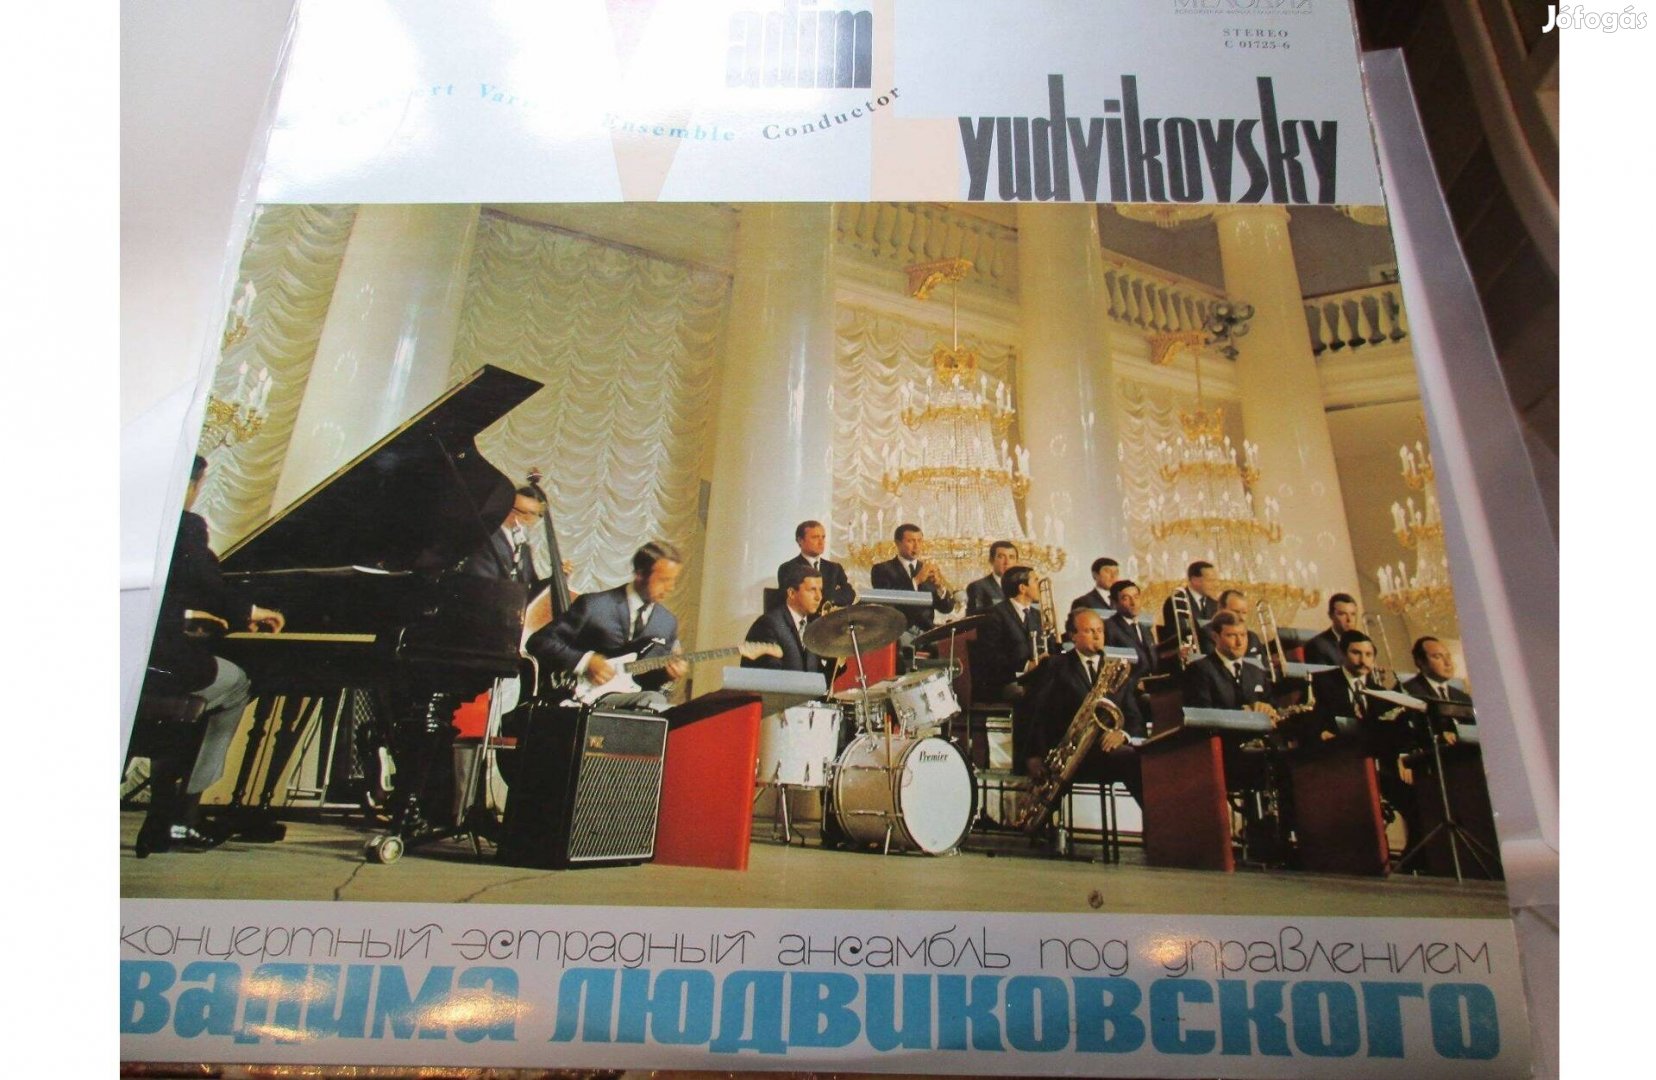 Vadim Lyudvikovsky bakelit hanglemez eladó